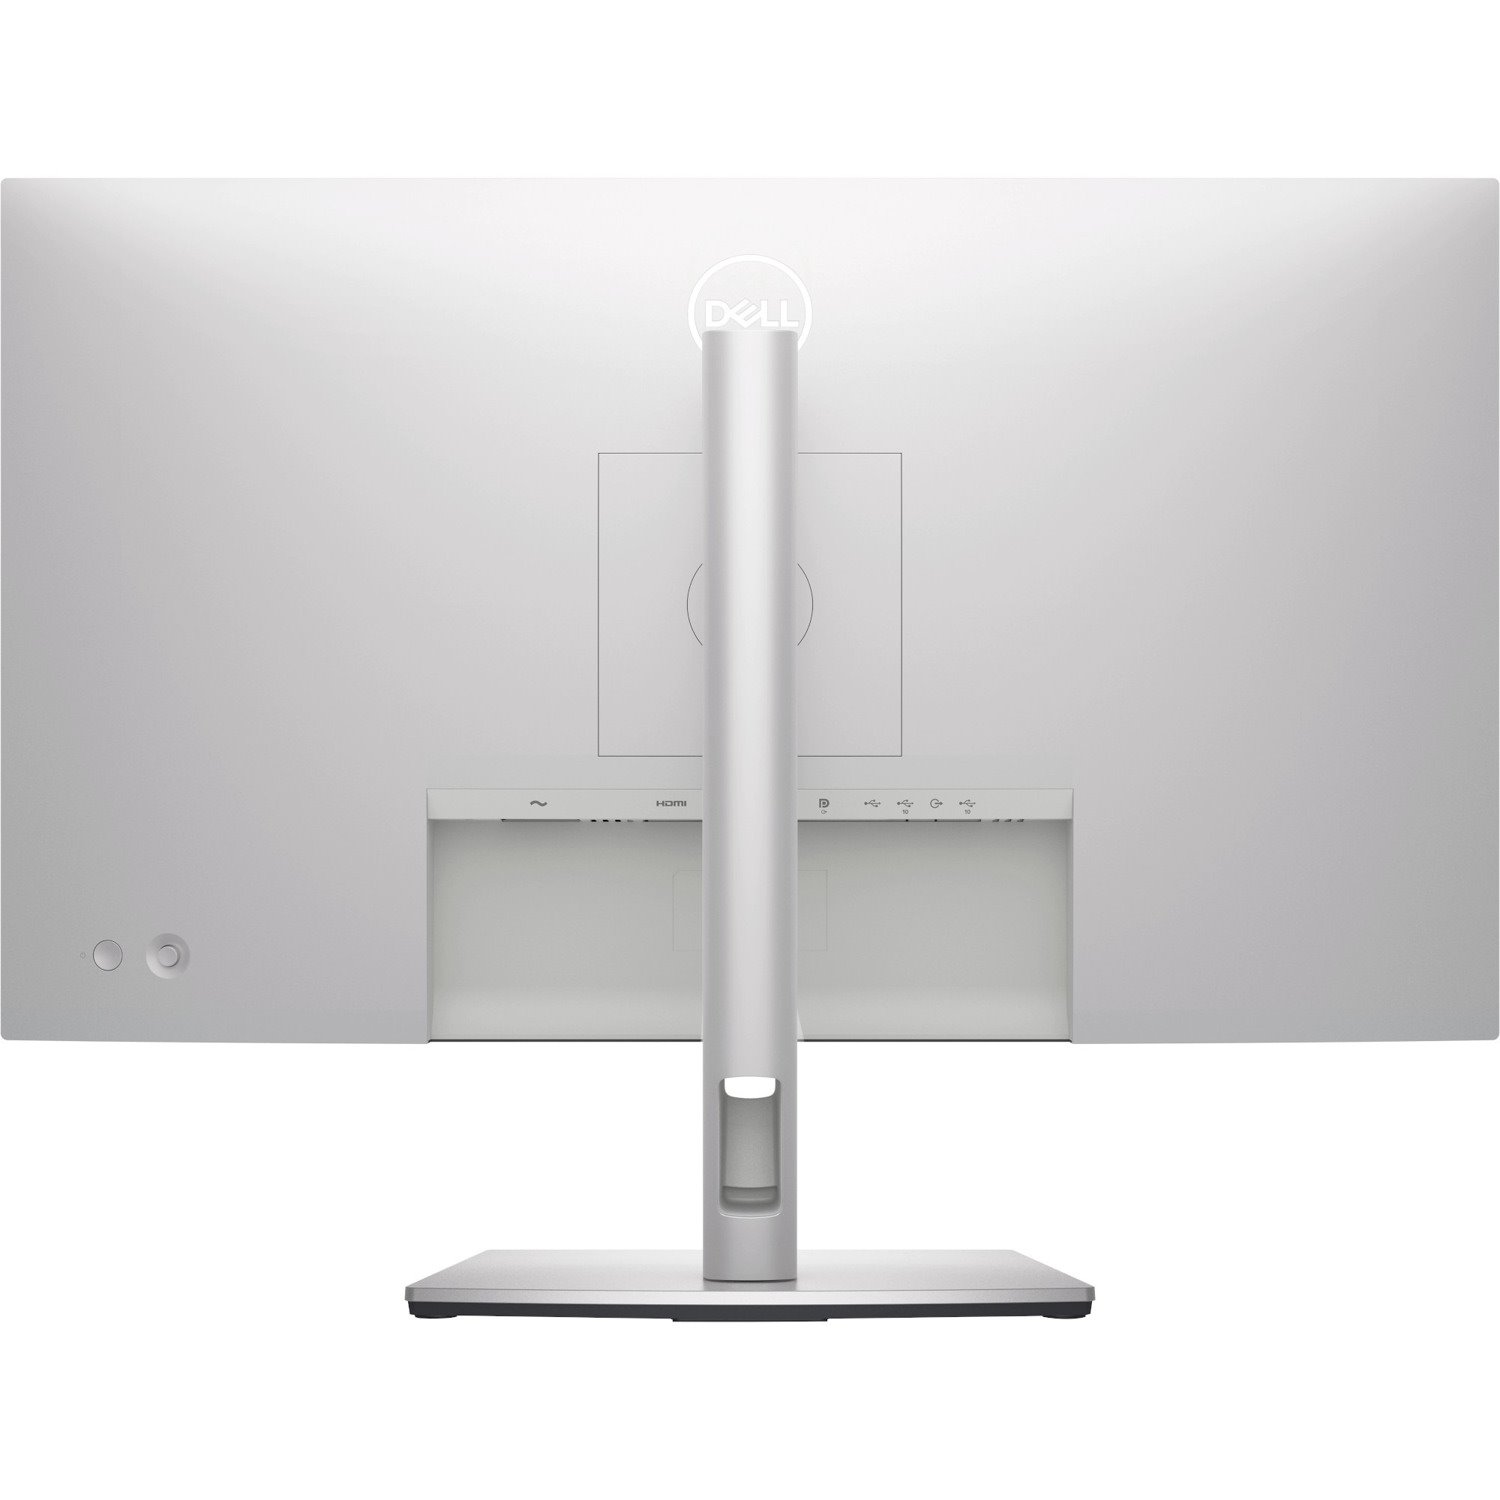 Dell UltraSharp U2722D 27" LCD Monitor - 16:9 - Black, Silver